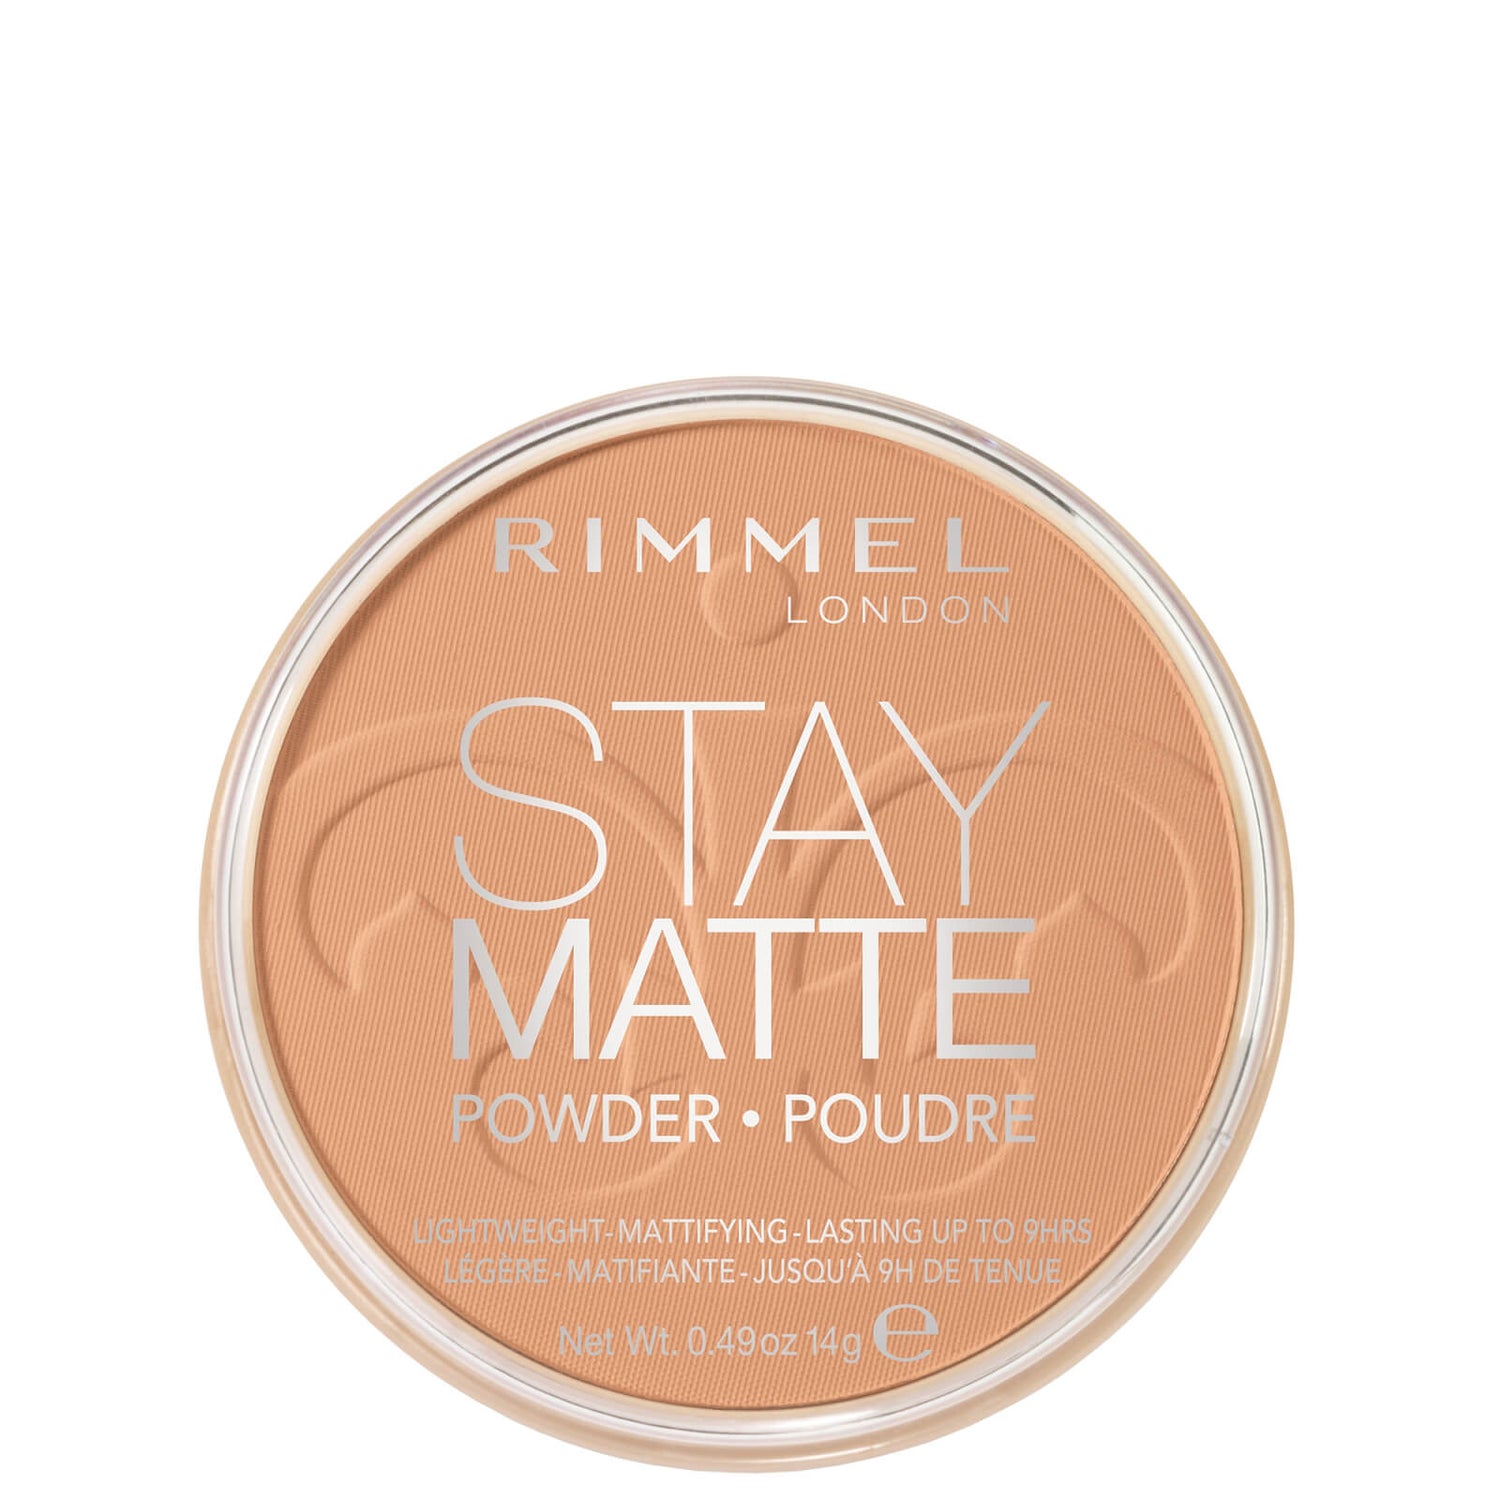 Rimmel London Stay Matte Pressed Powder – 30 – Caramel, 14g